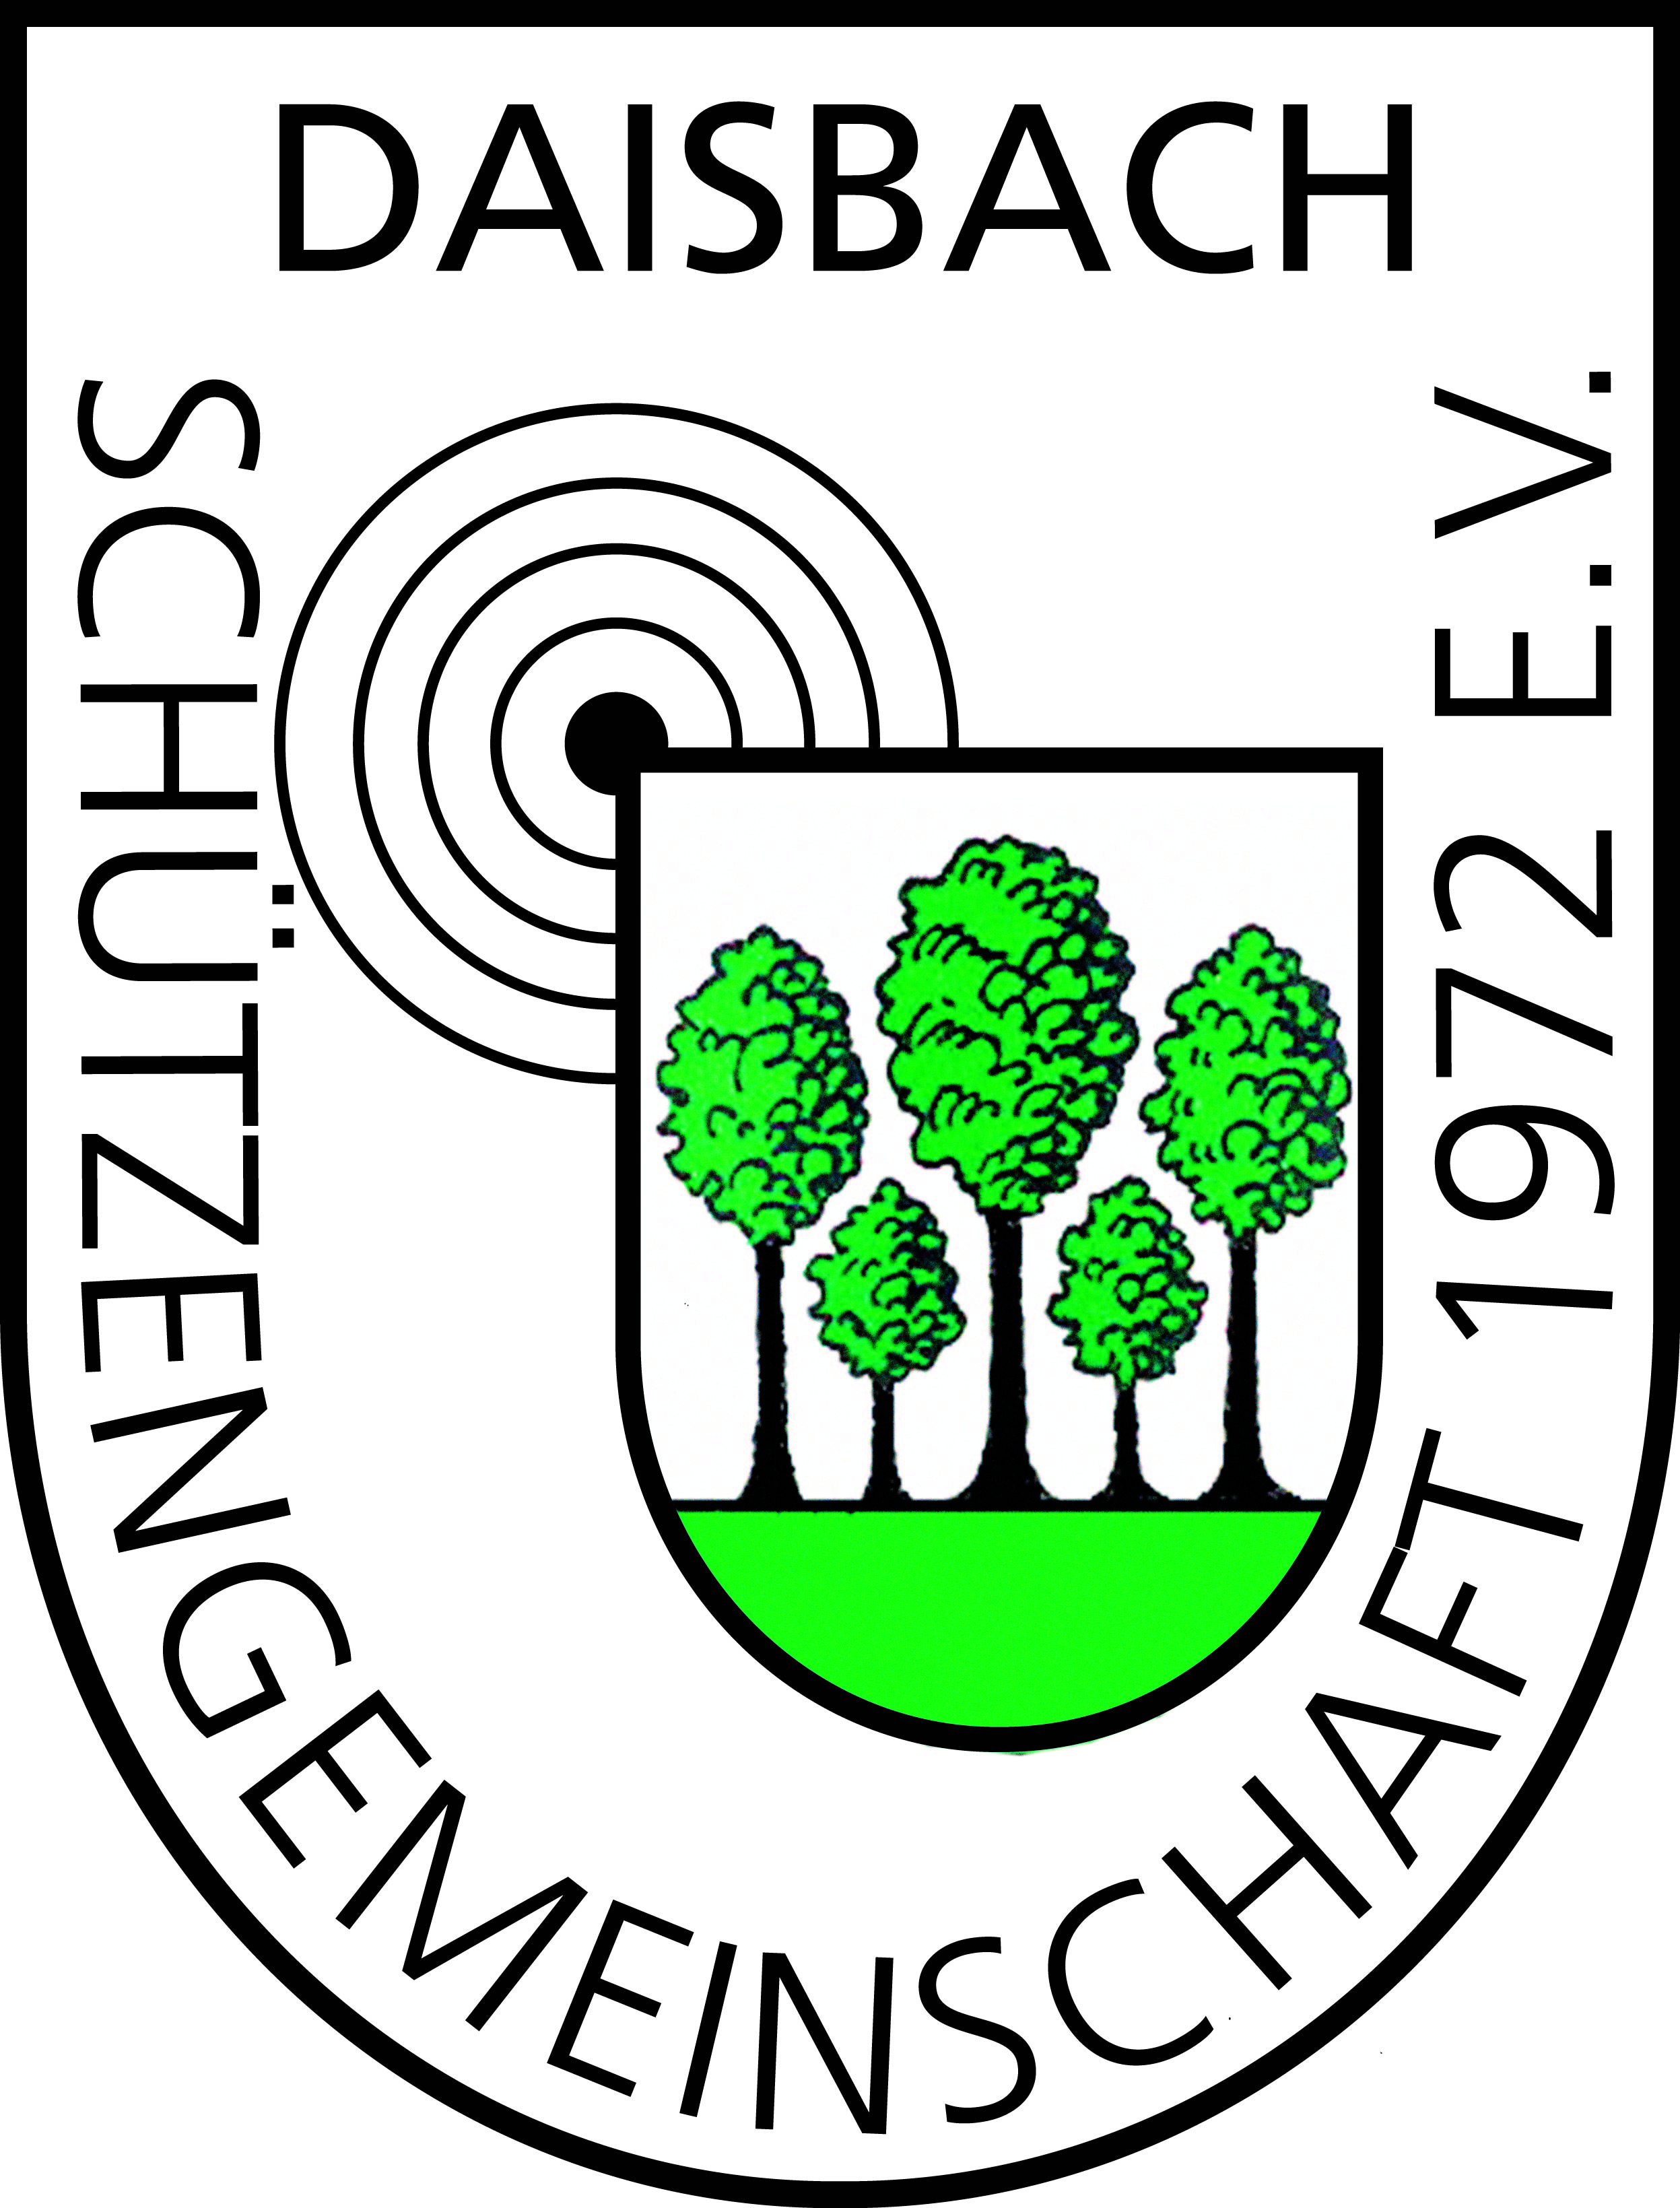 (c) Schuetzenverein-daisbach-1972ev.de